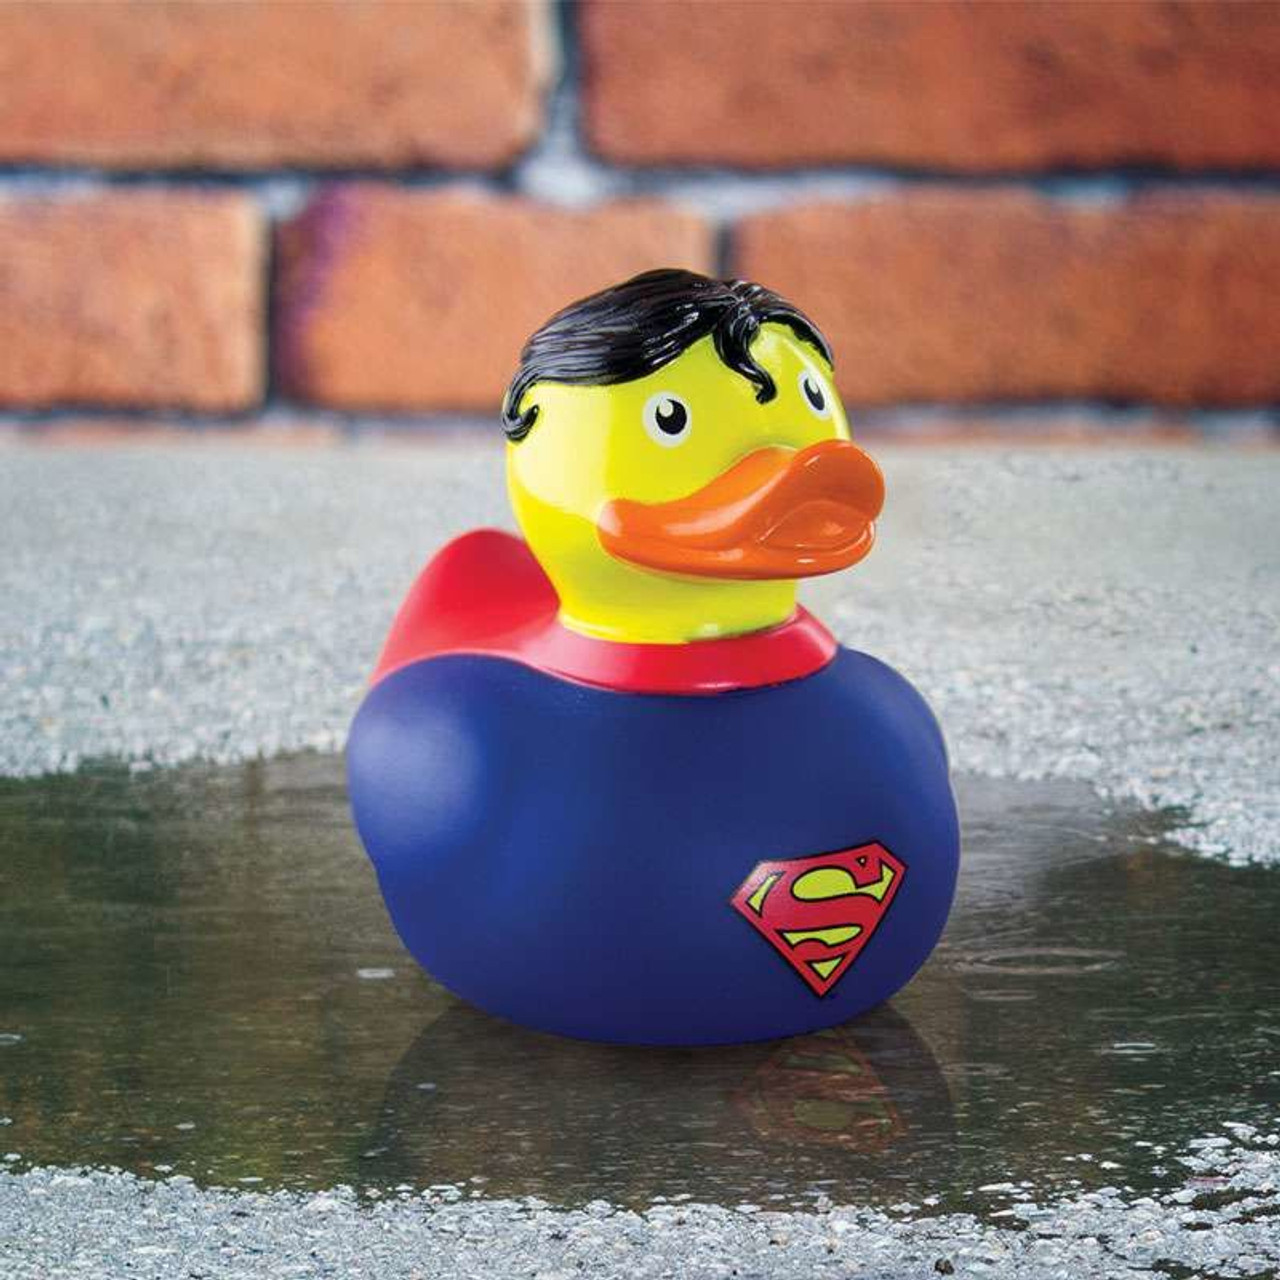 joker bath duck